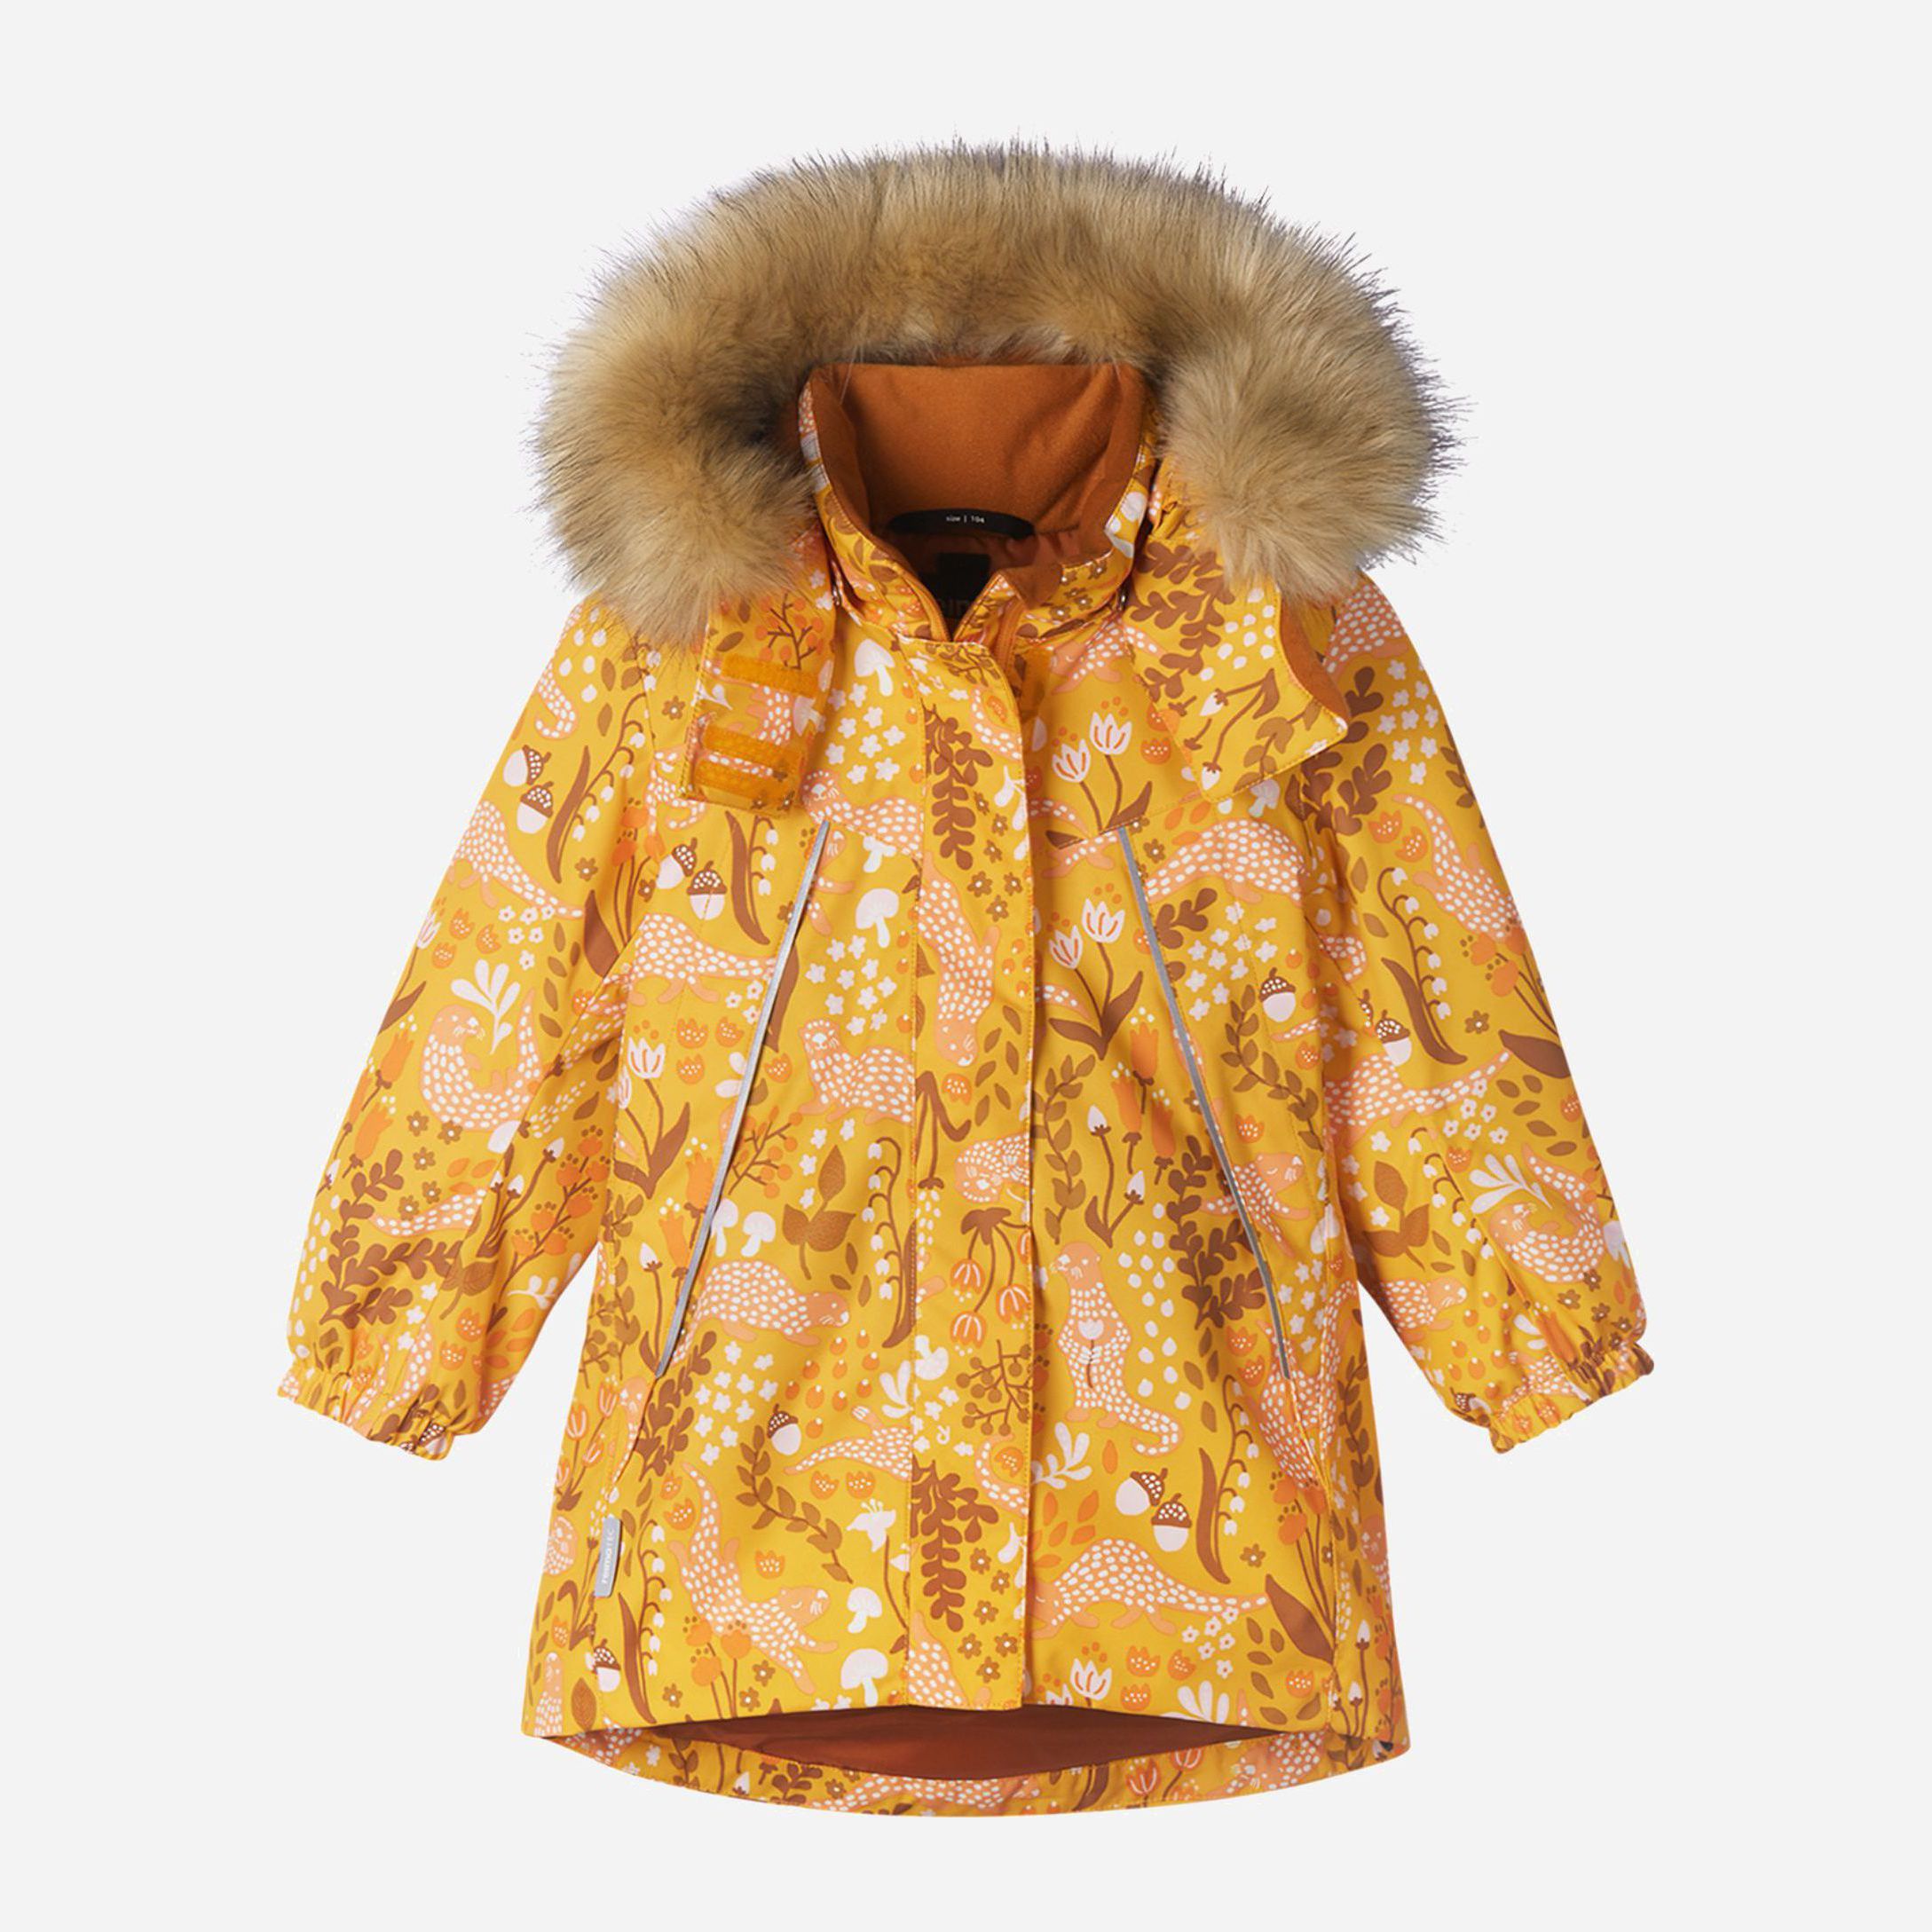 Акция на Дитяча зимова термо куртка для дівчинки Reima Muhvi 521642-2406 92 см от Rozetka